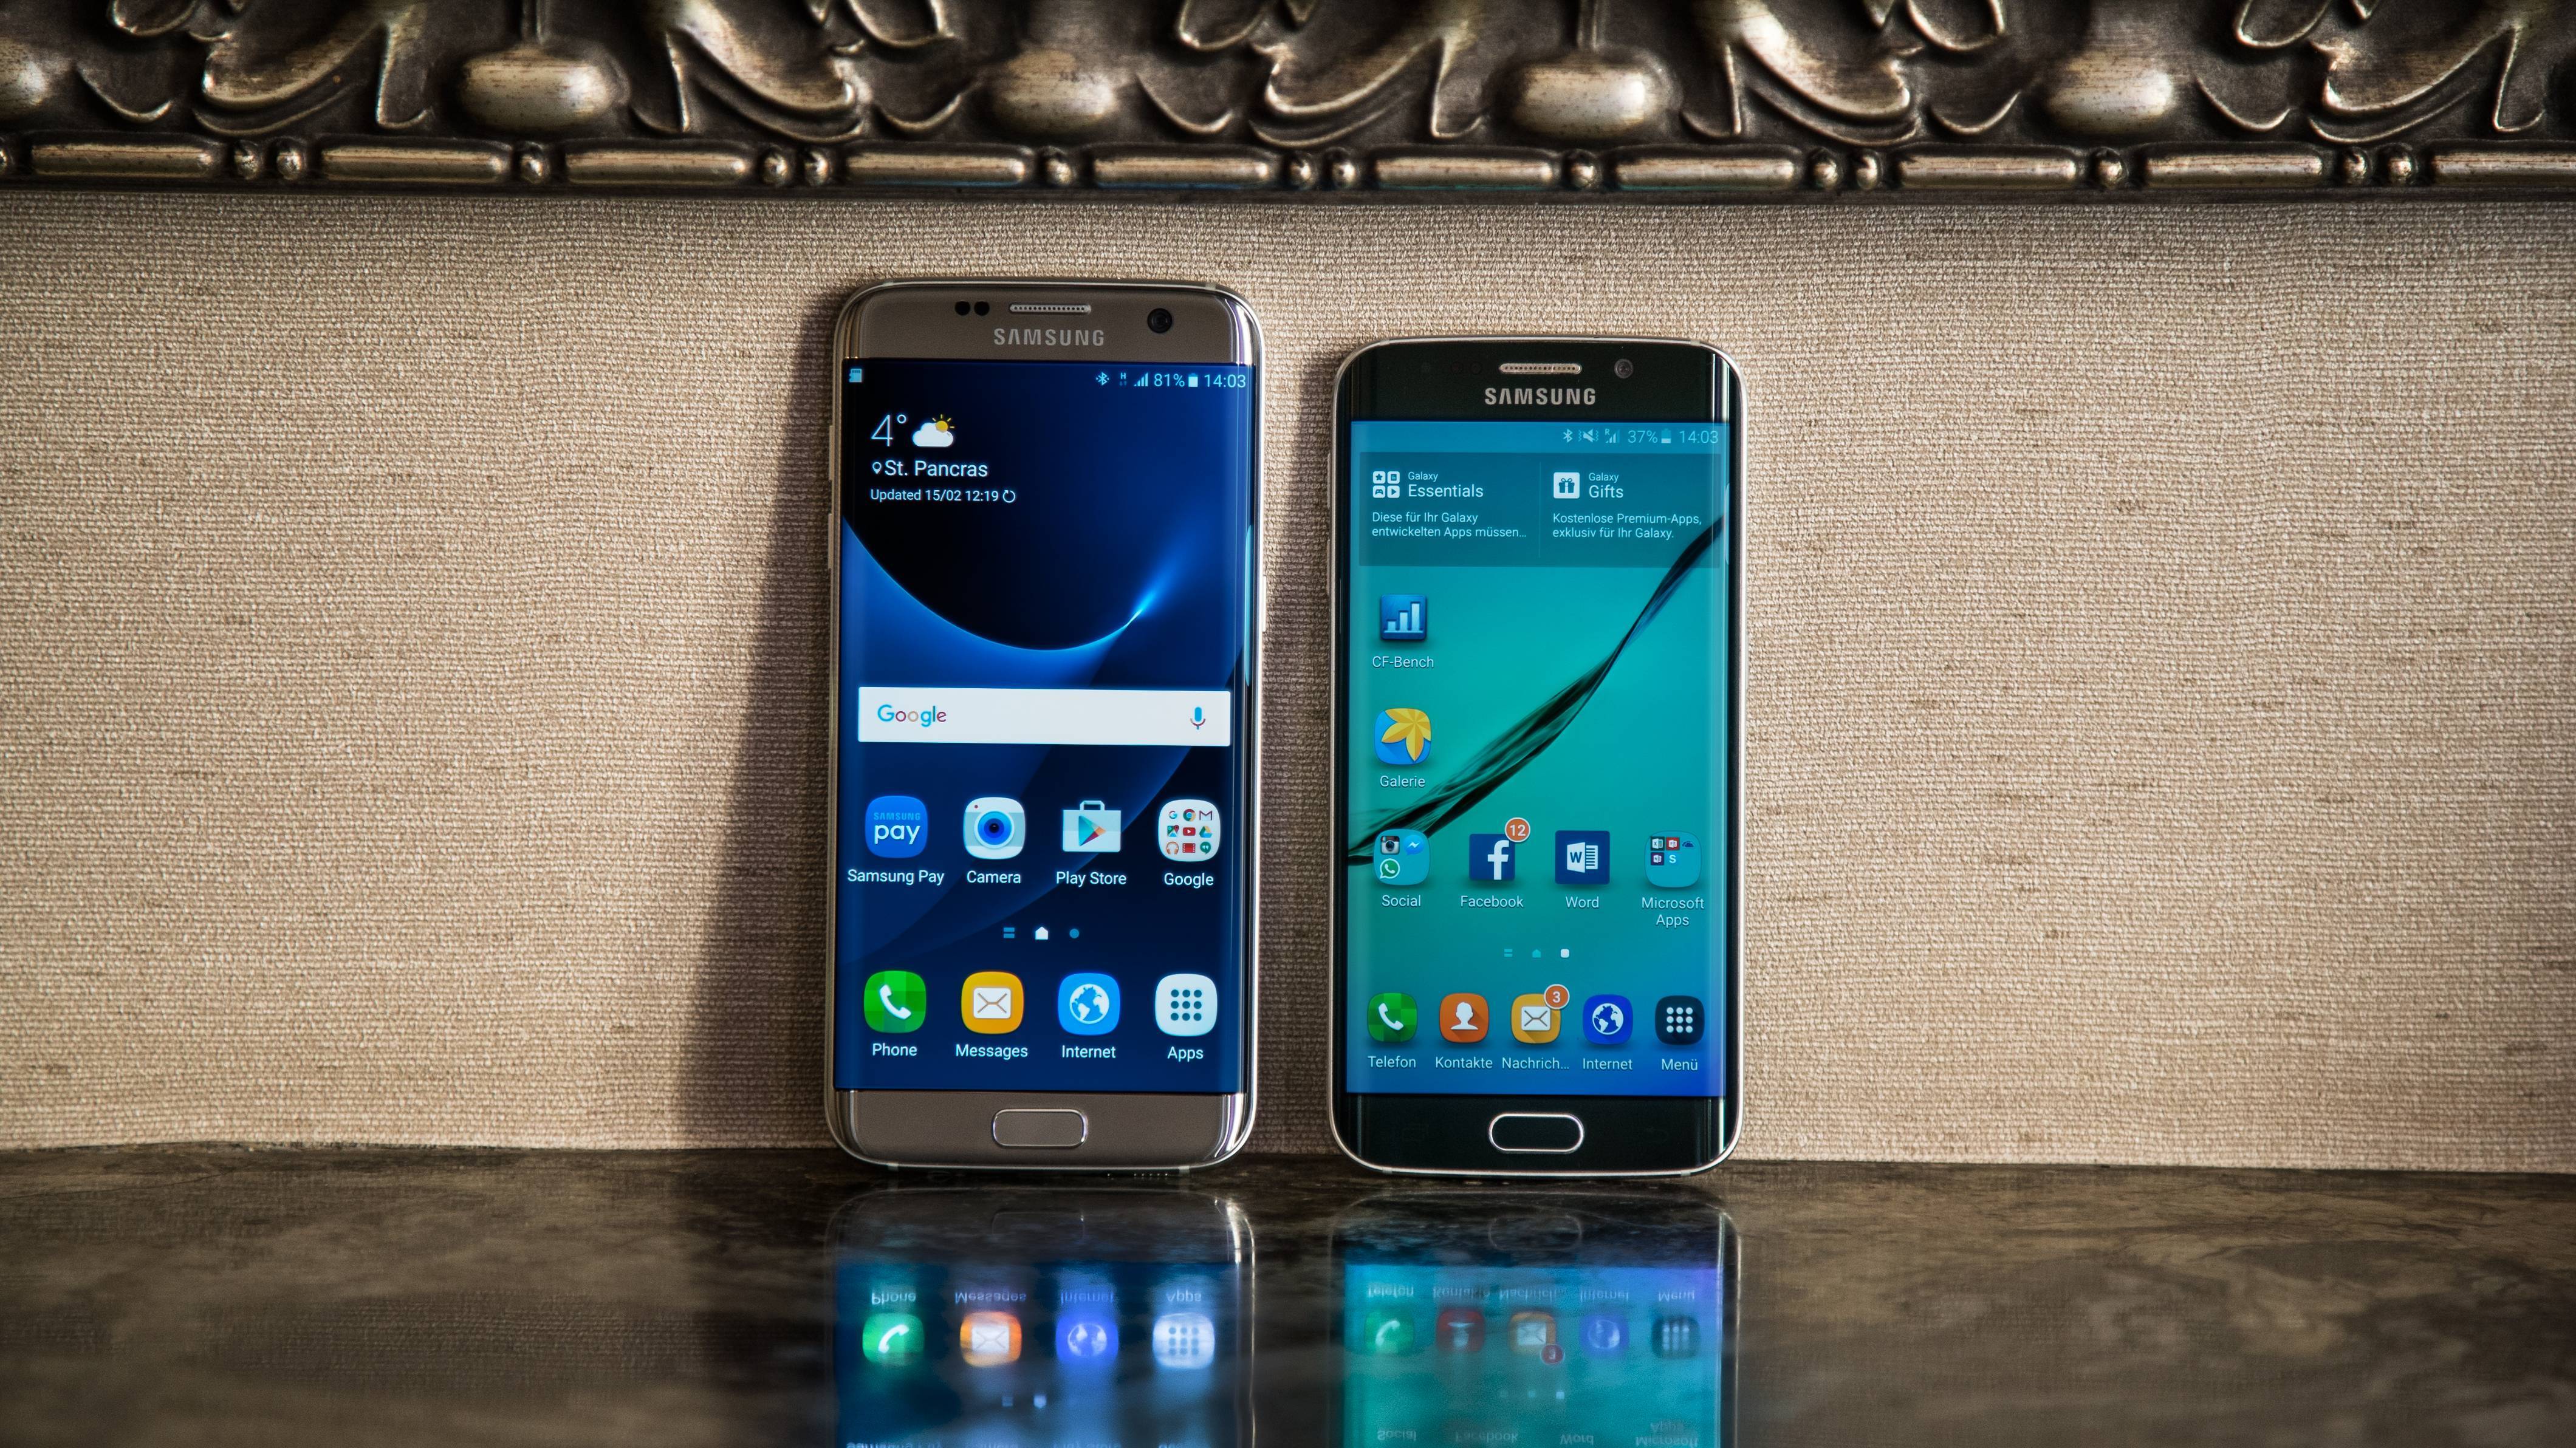 Samsung galaxy s7 edge - характеристики, обзор камеры, отзывы, видео и фото